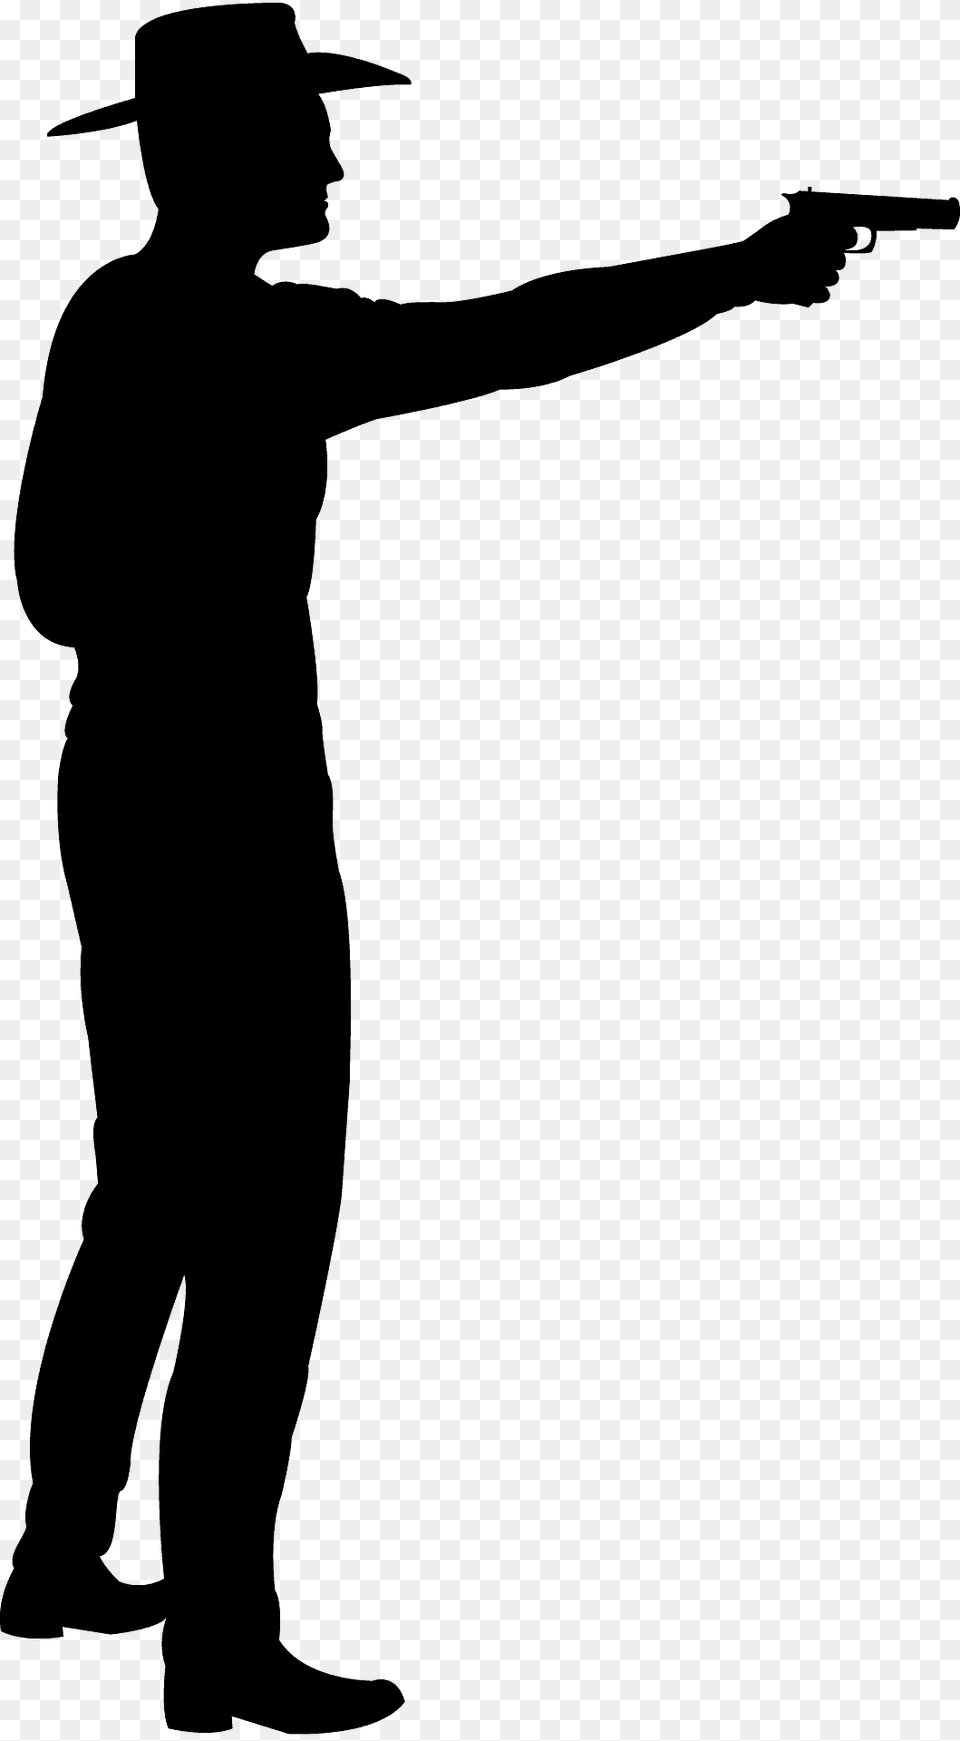 Man Shooting Gun Silhouette, Weapon, Hat, Handgun, Firearm Free Transparent Png